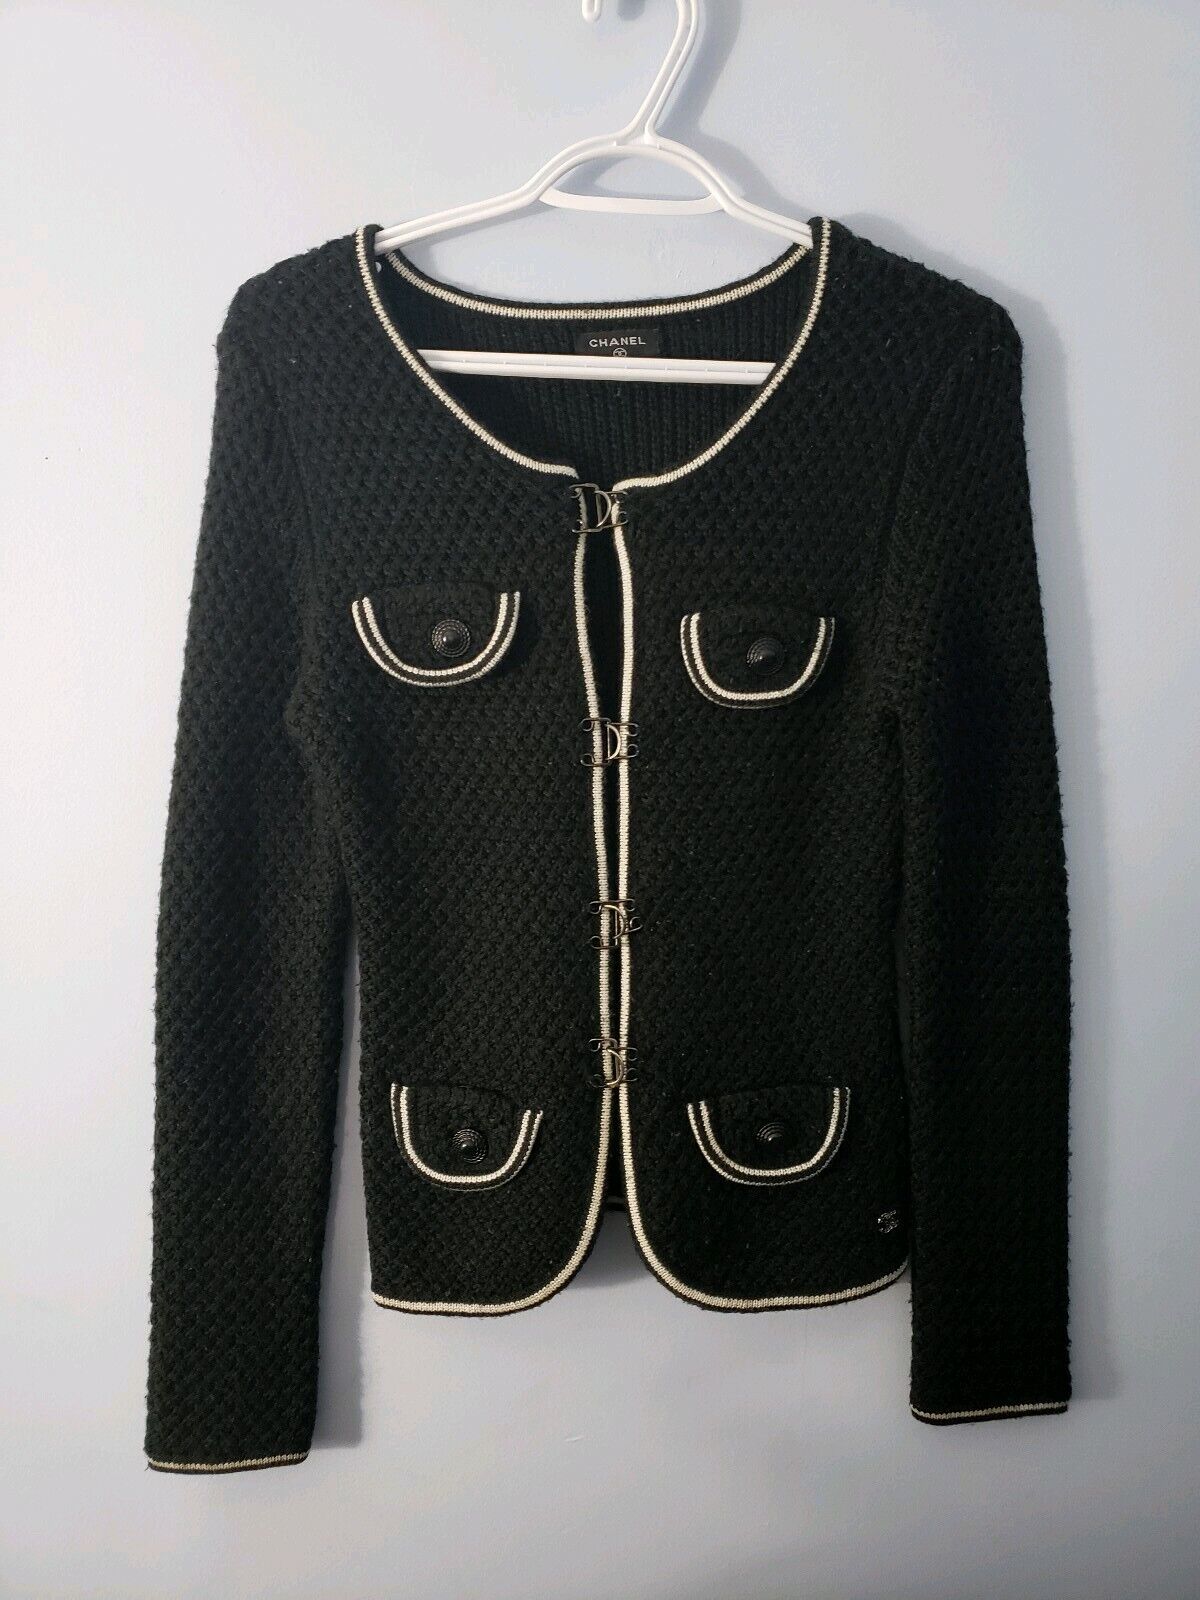 RARE Vintage Chanel Cardigan Sweater Women's Small Black Knit | eBay